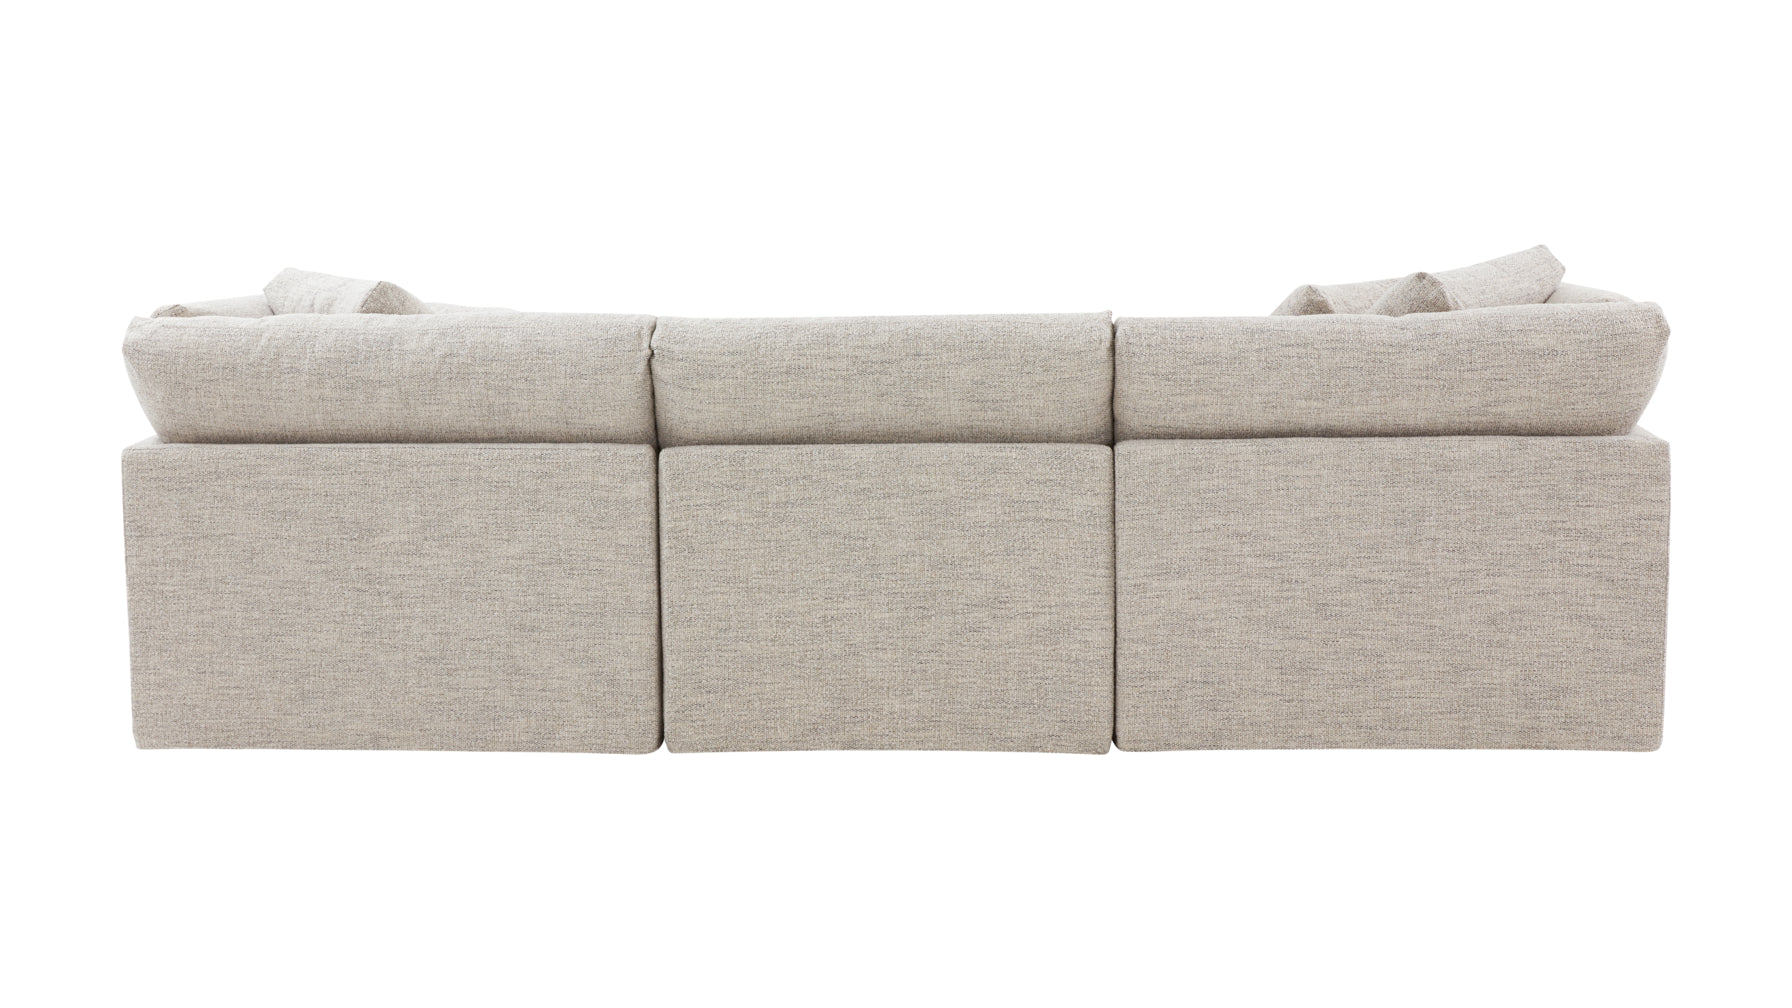 Get Together™ 3-Piece Modular Sofa, Large, Oatmeal - Image 10